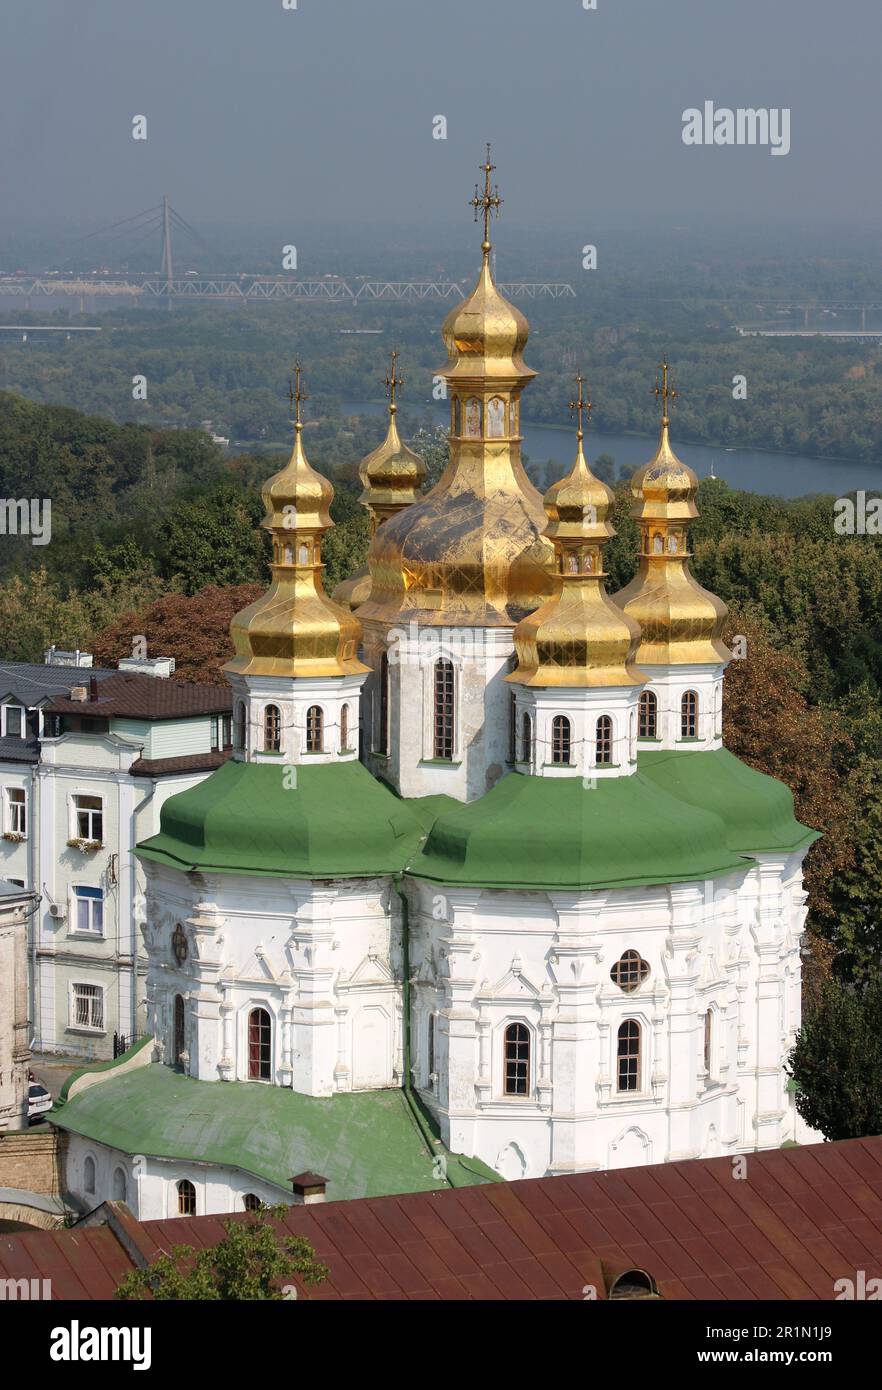 The All Saints Church in Kiev, Ukraine - George Chernilevsky Stock Photo